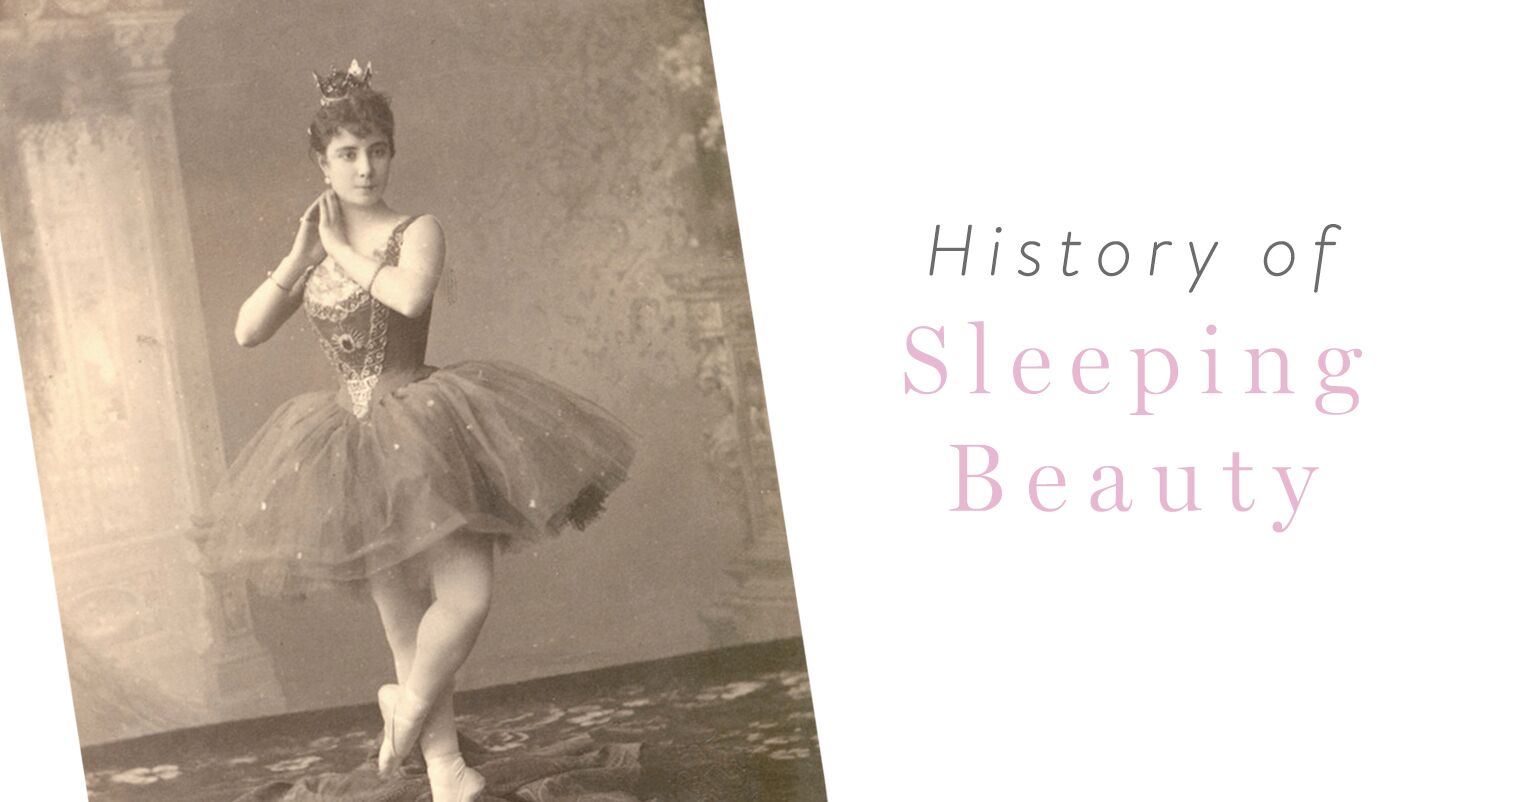 The History of Sleeping Beauty